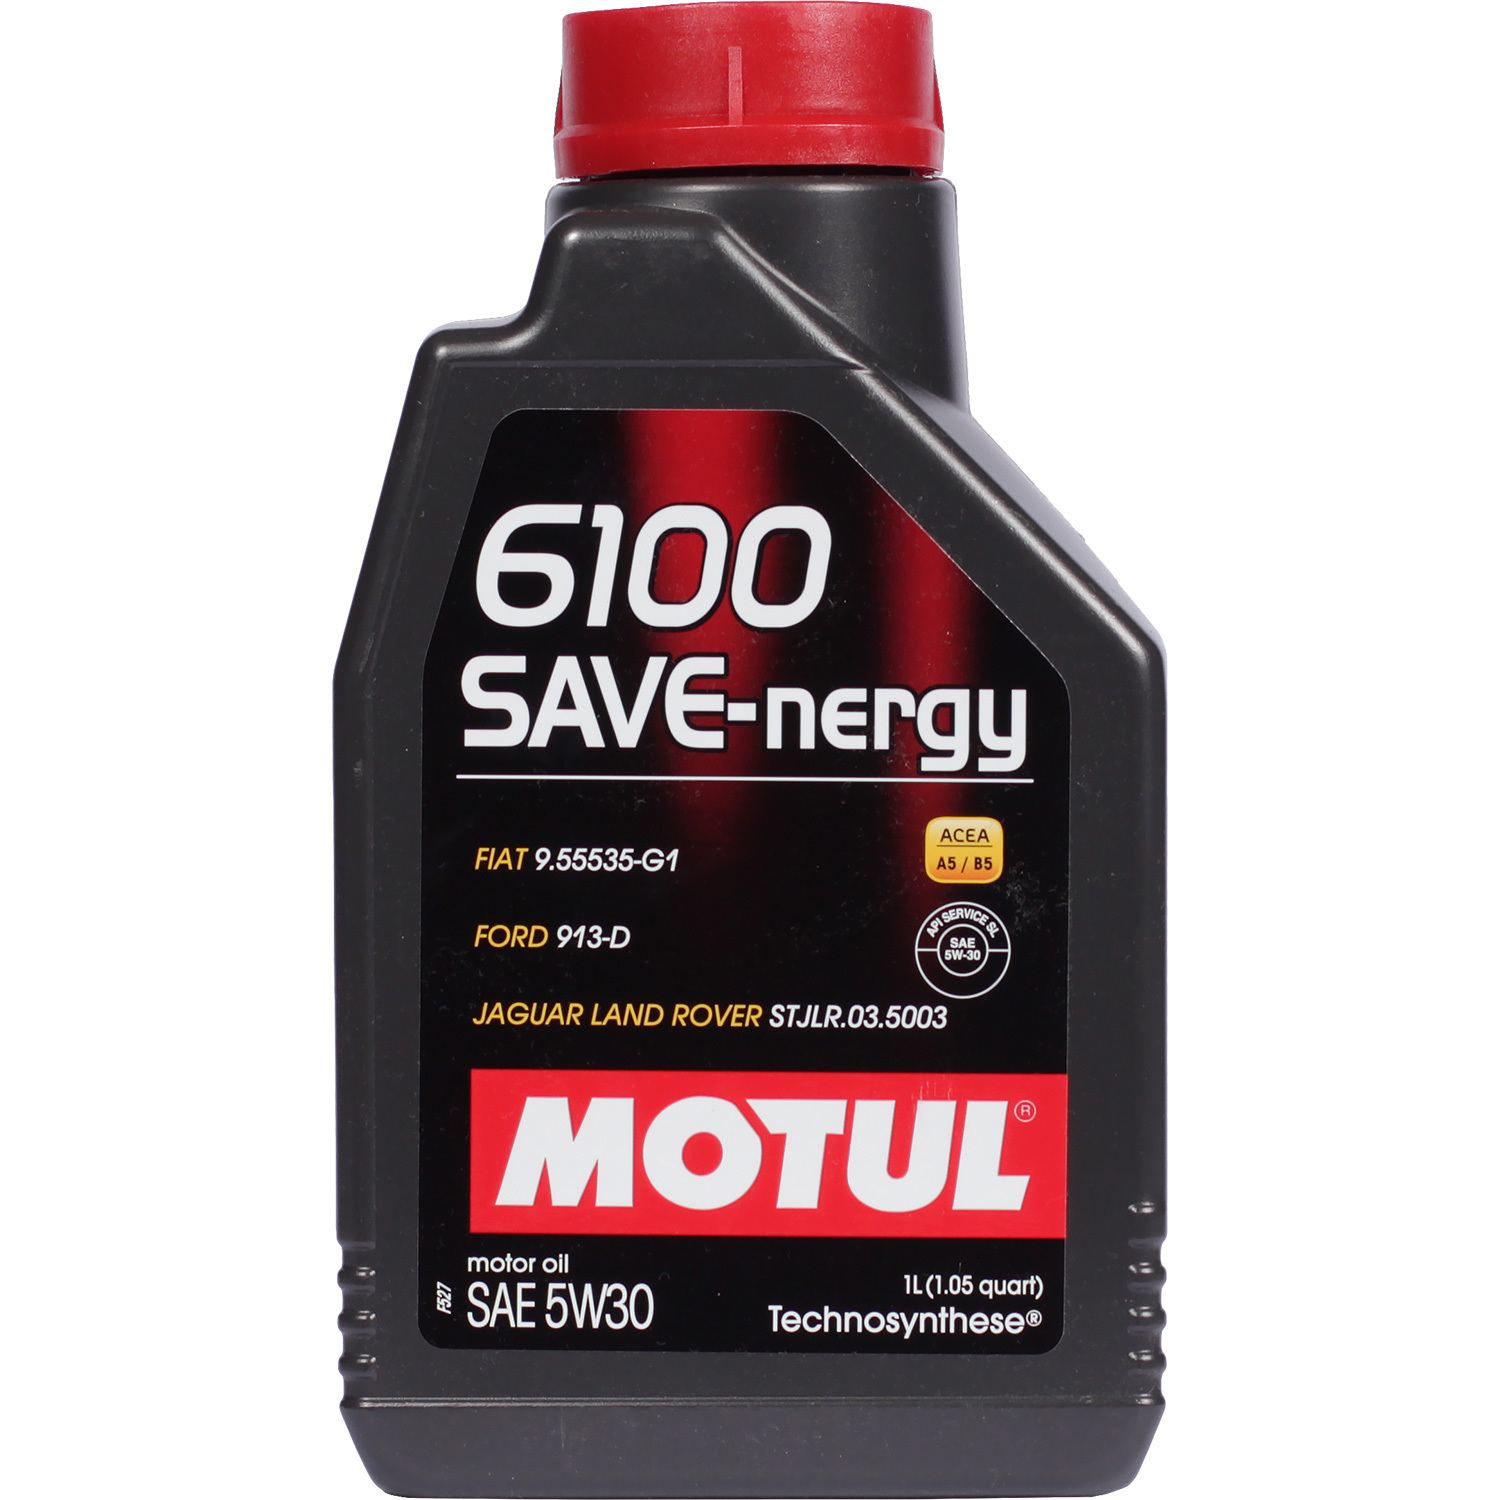 Motul Моторное масло Motul 6100 SAVE-NERGY 5W-30, 1 л масло моторное motul 6100 syn clean 5w 30 синтетическое 1 л